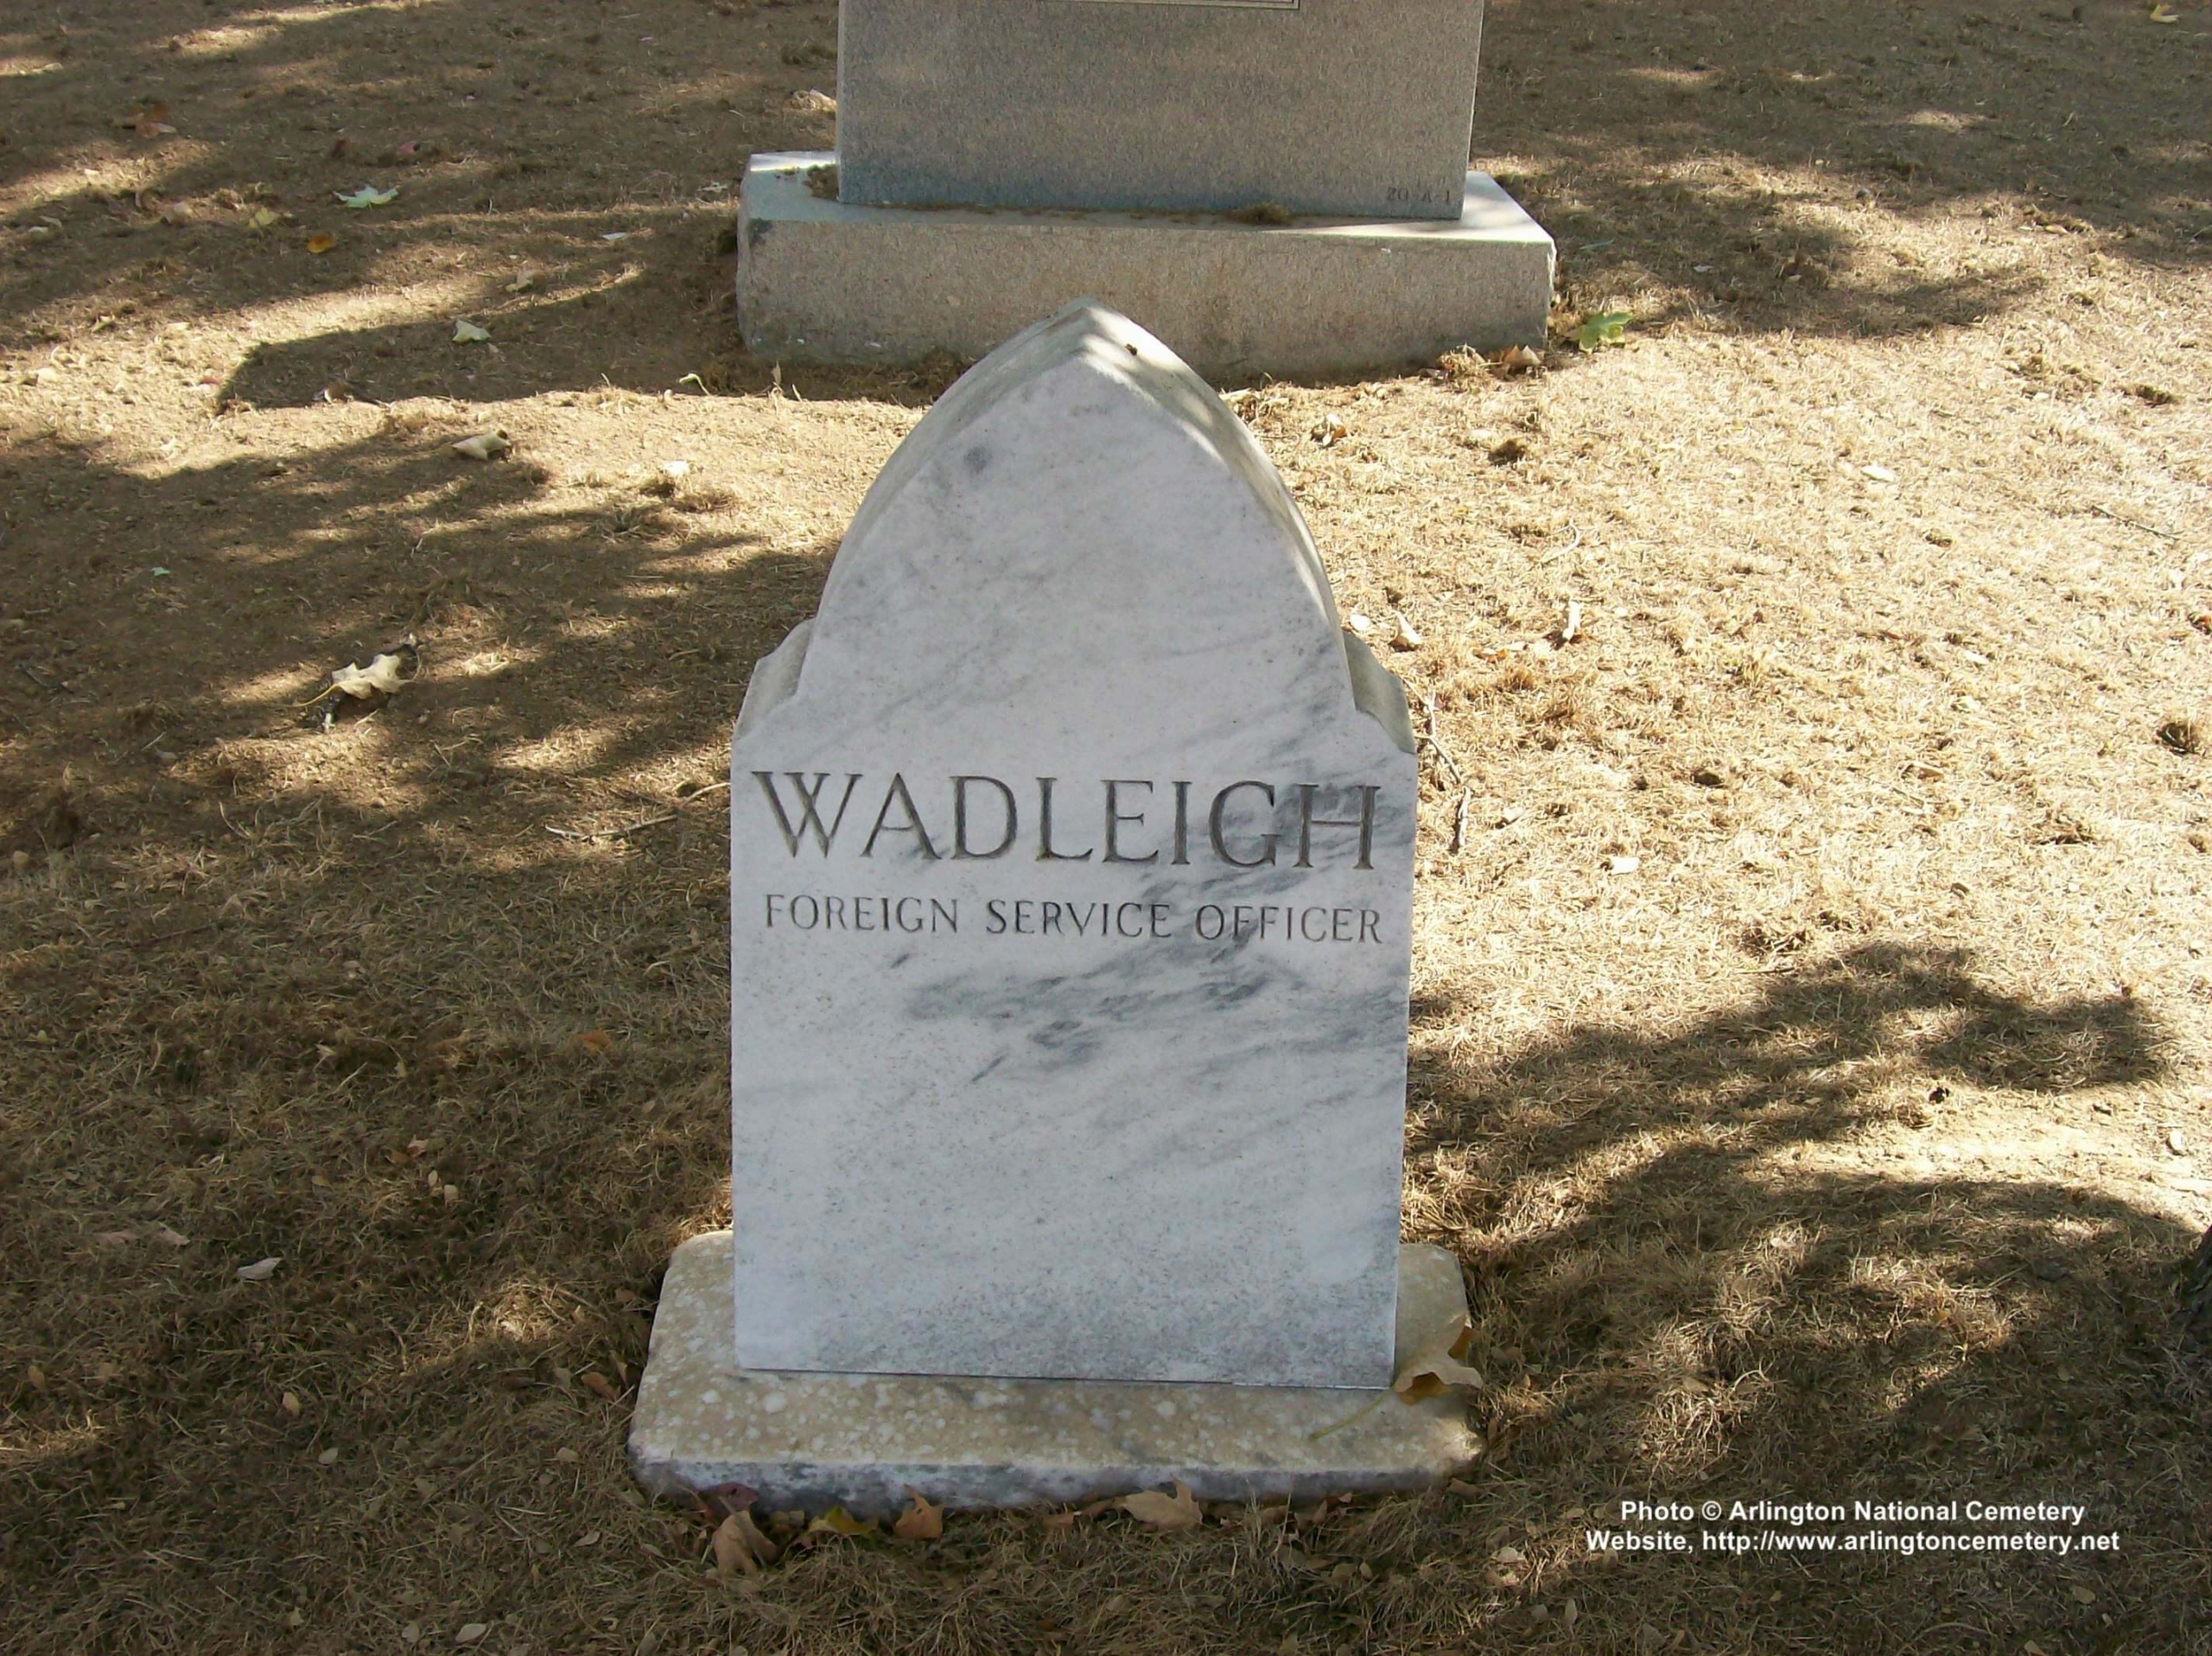 grwadleigh-gravesite-photo-october-2007-002